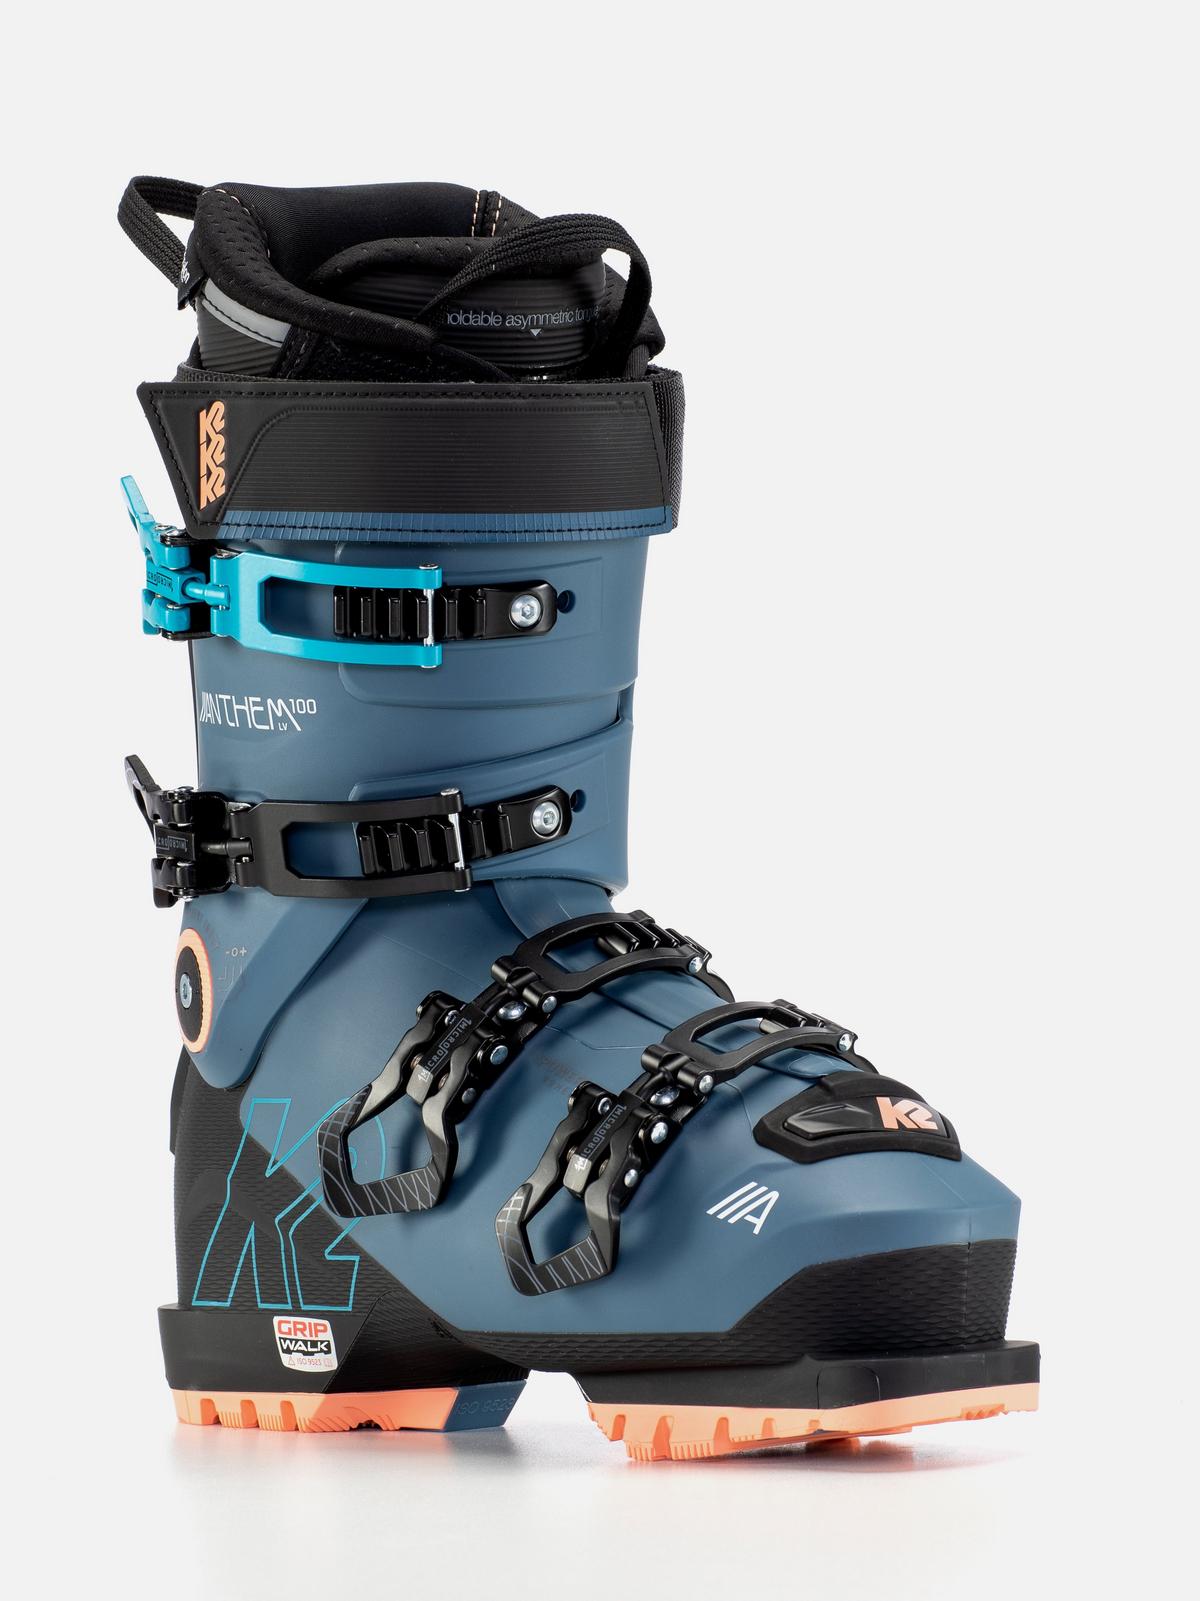 Anthem 100 Ski Boots | K2 Skis and K2 Snowboarding